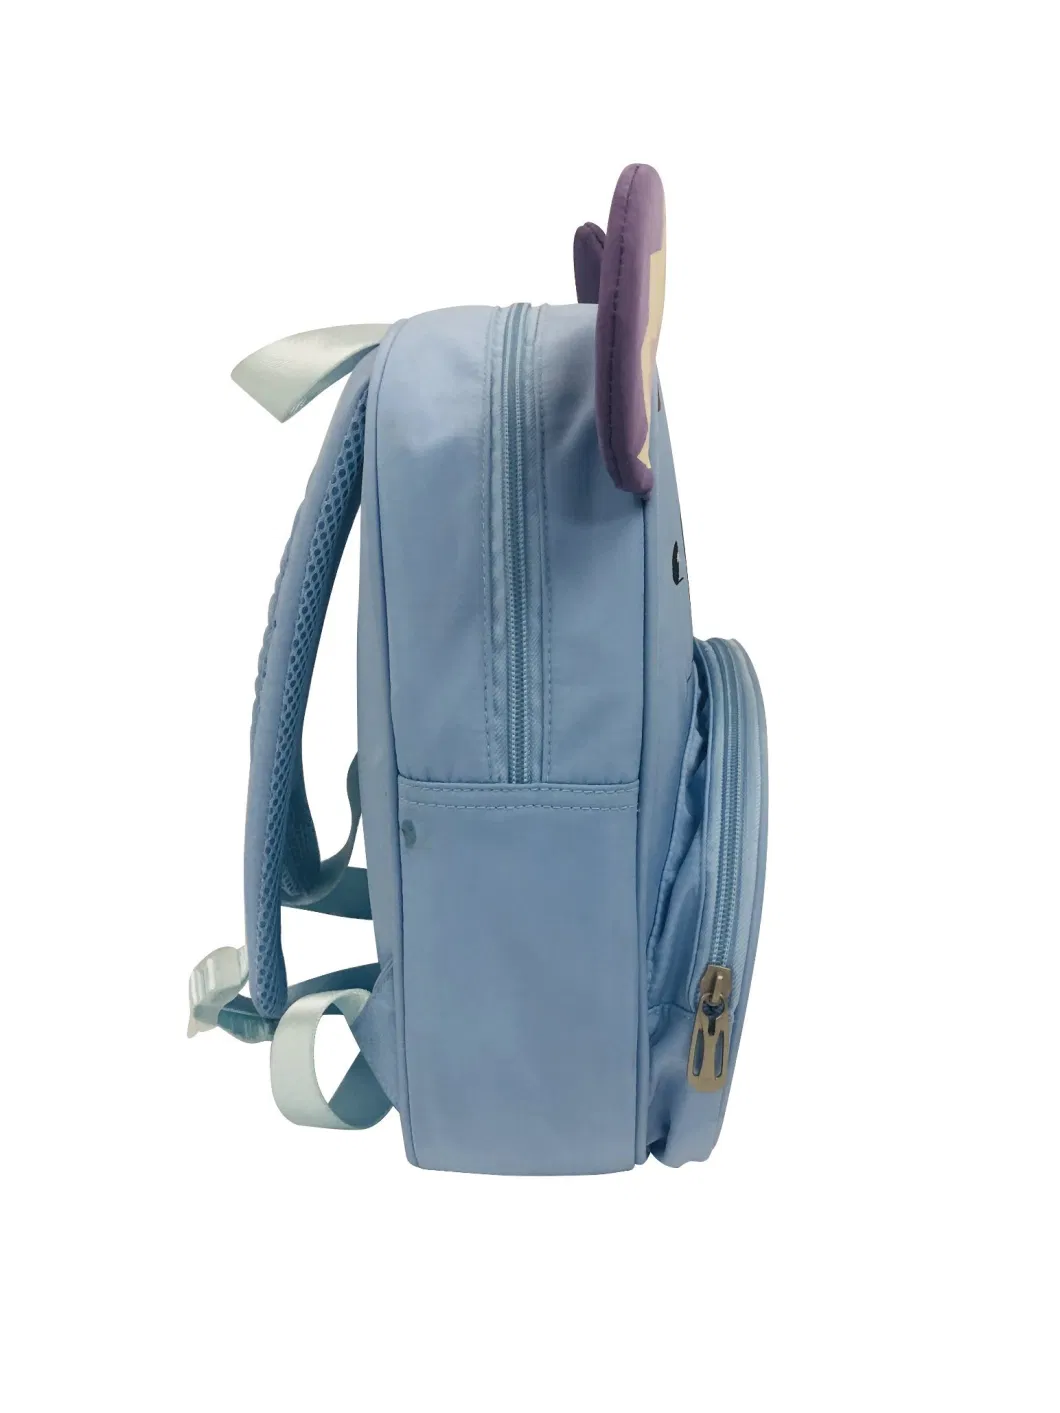 Kids Students School Bag Backpack for Boys &amp; Girls, Koala Style, Padded Back &amp; Adjustable Strap, Perfect Size for for School &amp; Travel